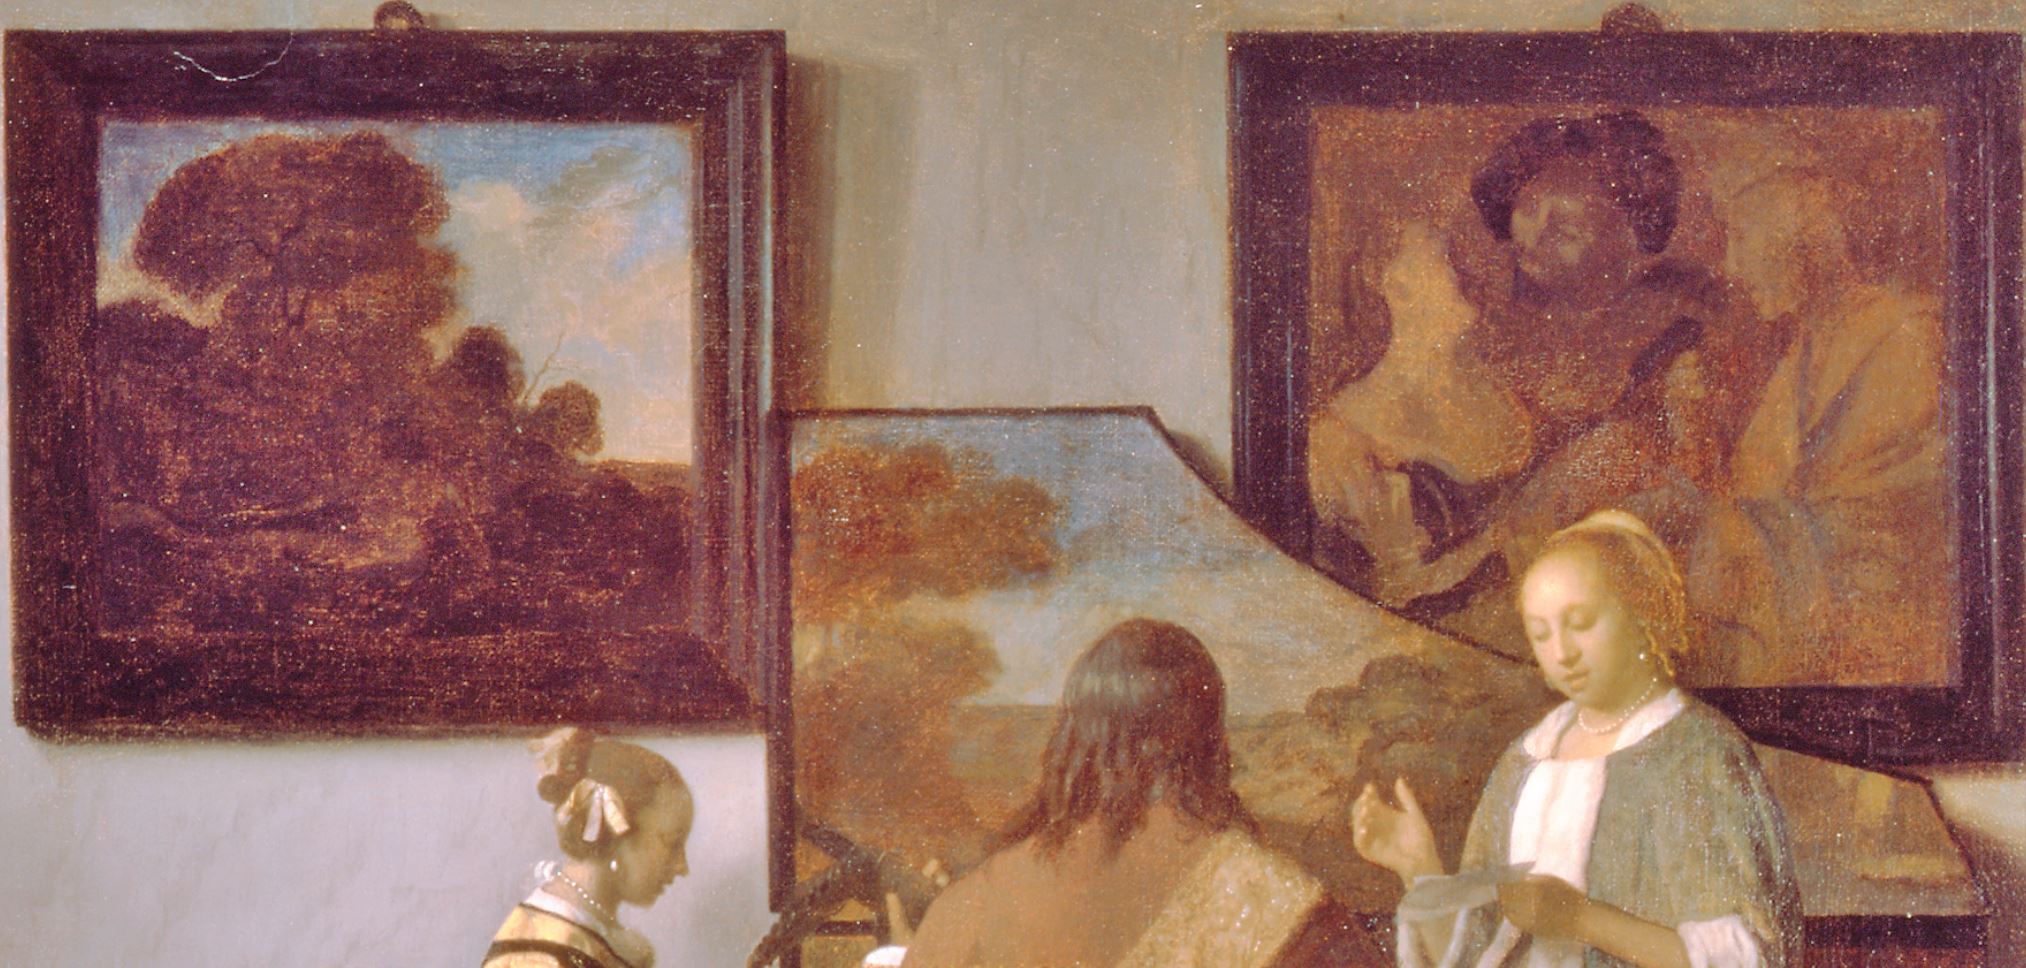 Vermeer 1663–66 The_Concert Vole en 1990 au Musee Isabella Stewart Gardner, Boston detail